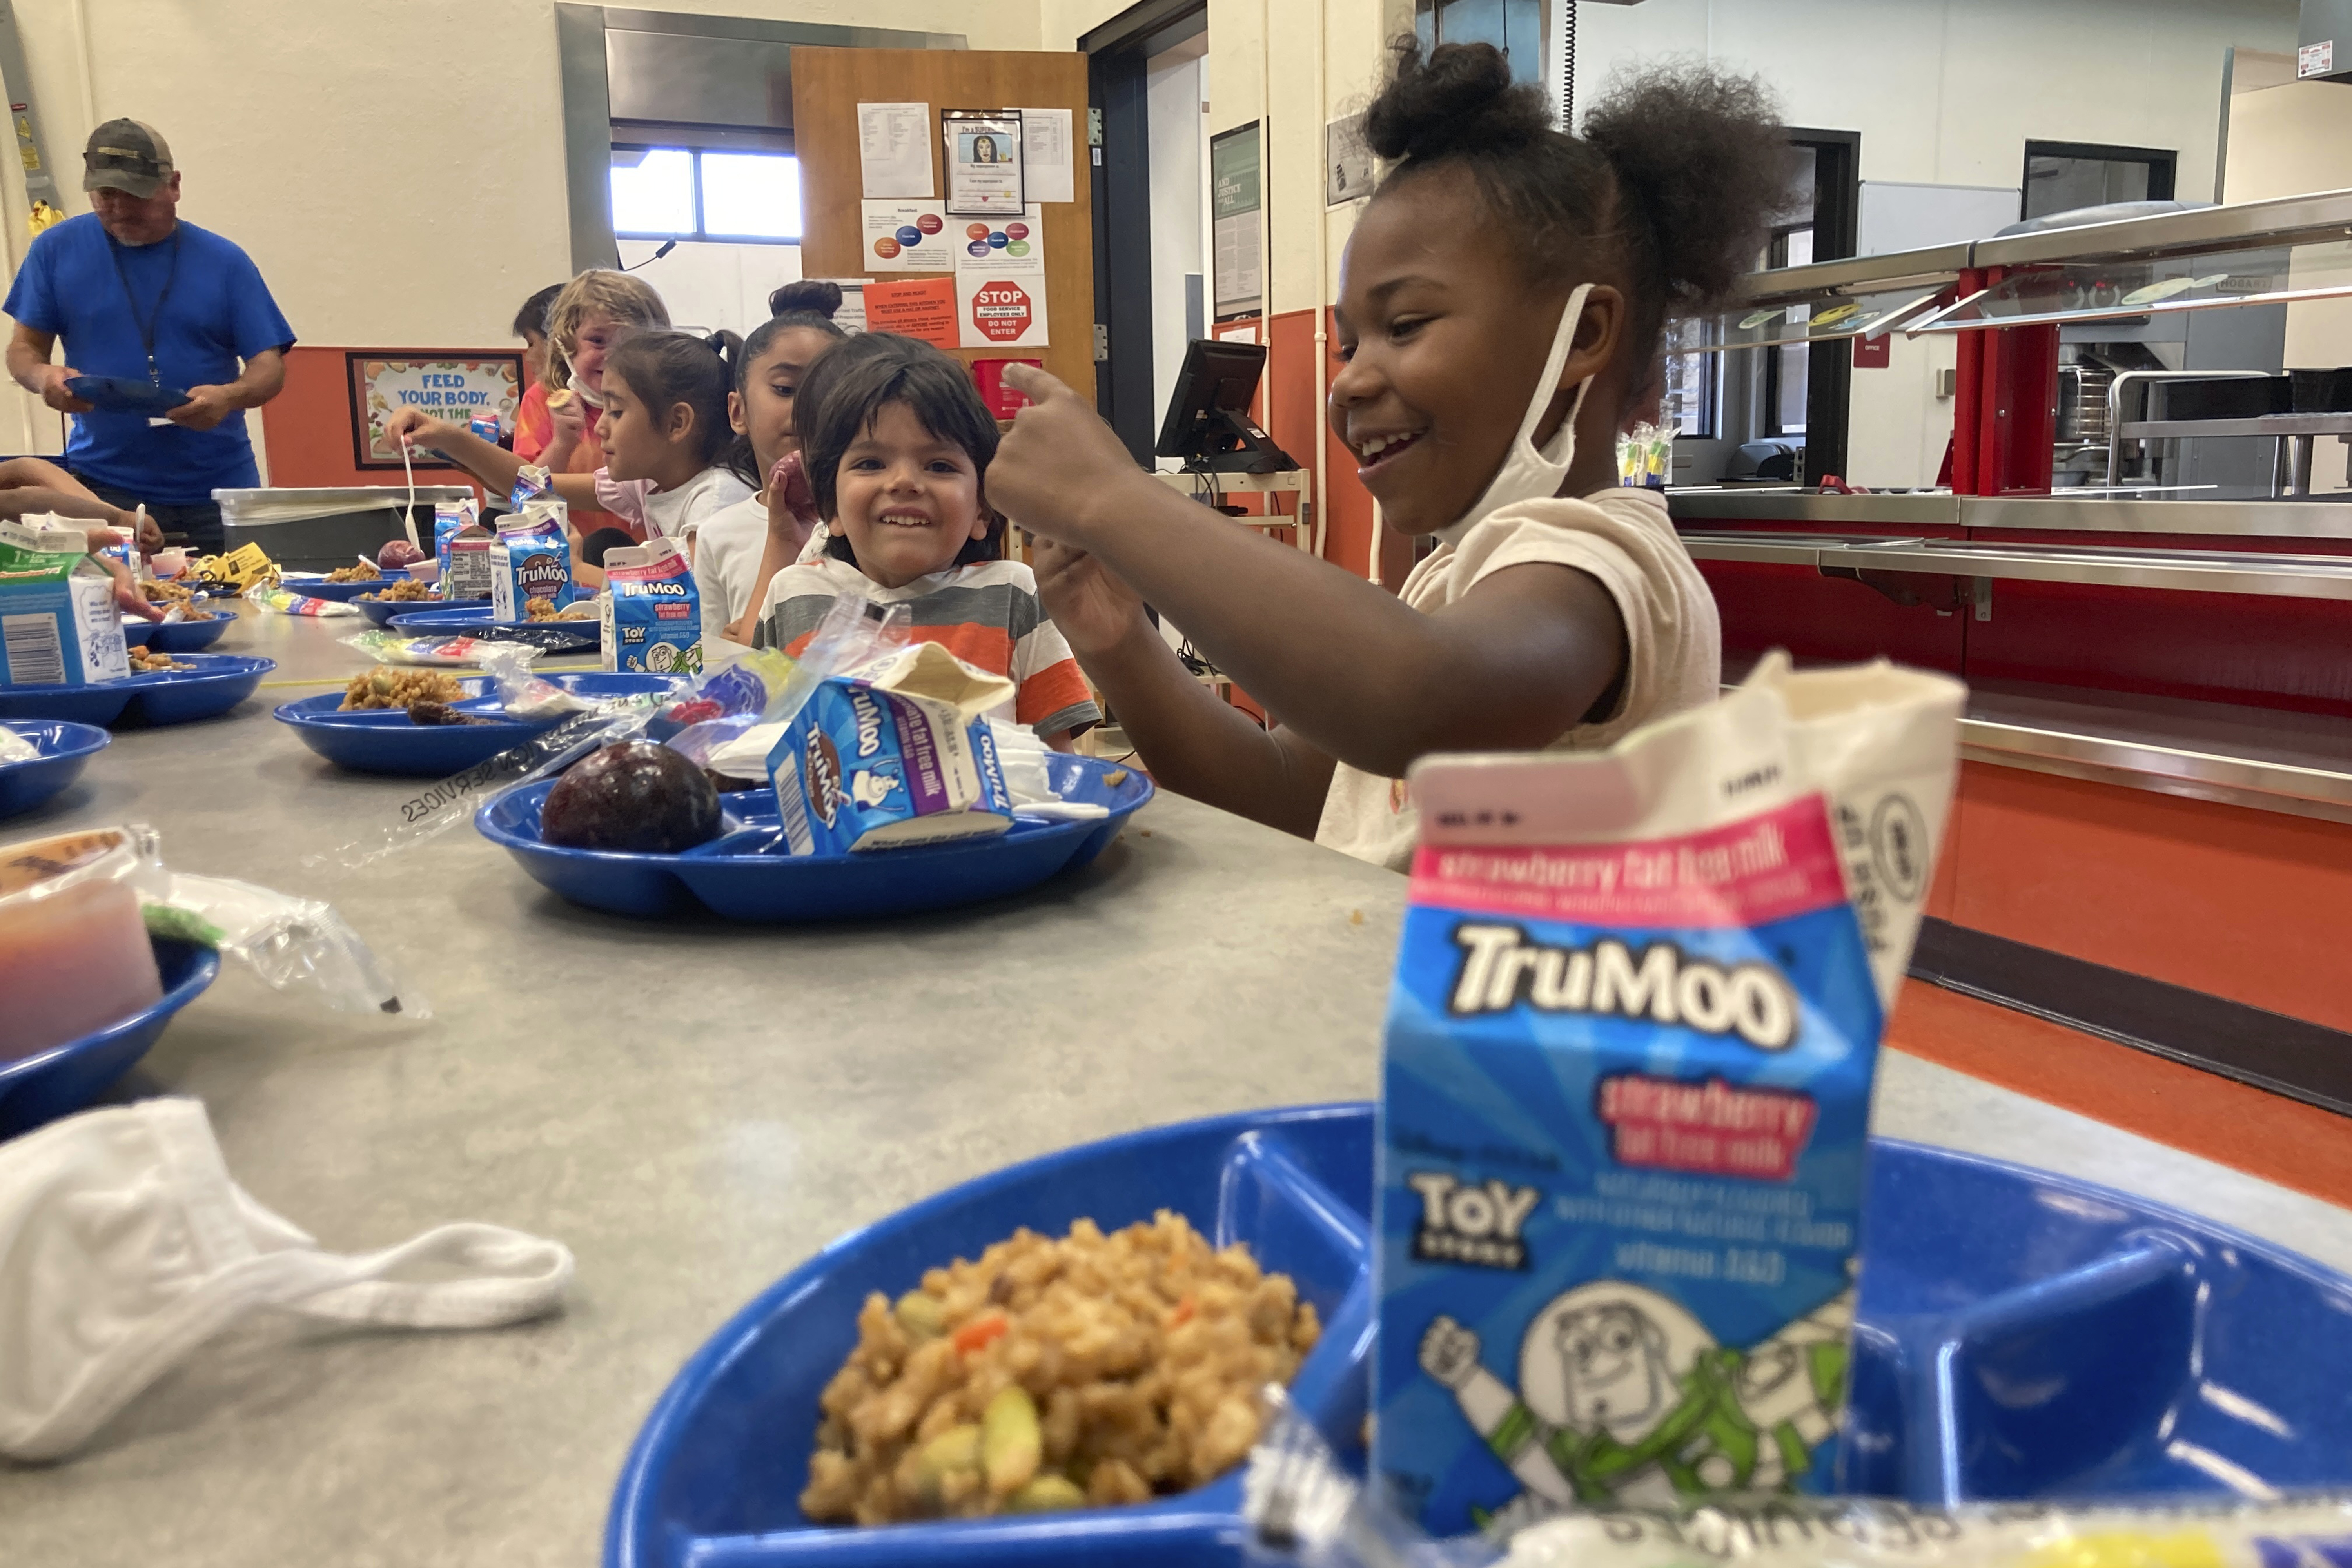 School lunch in elementary school in USA : r/pics